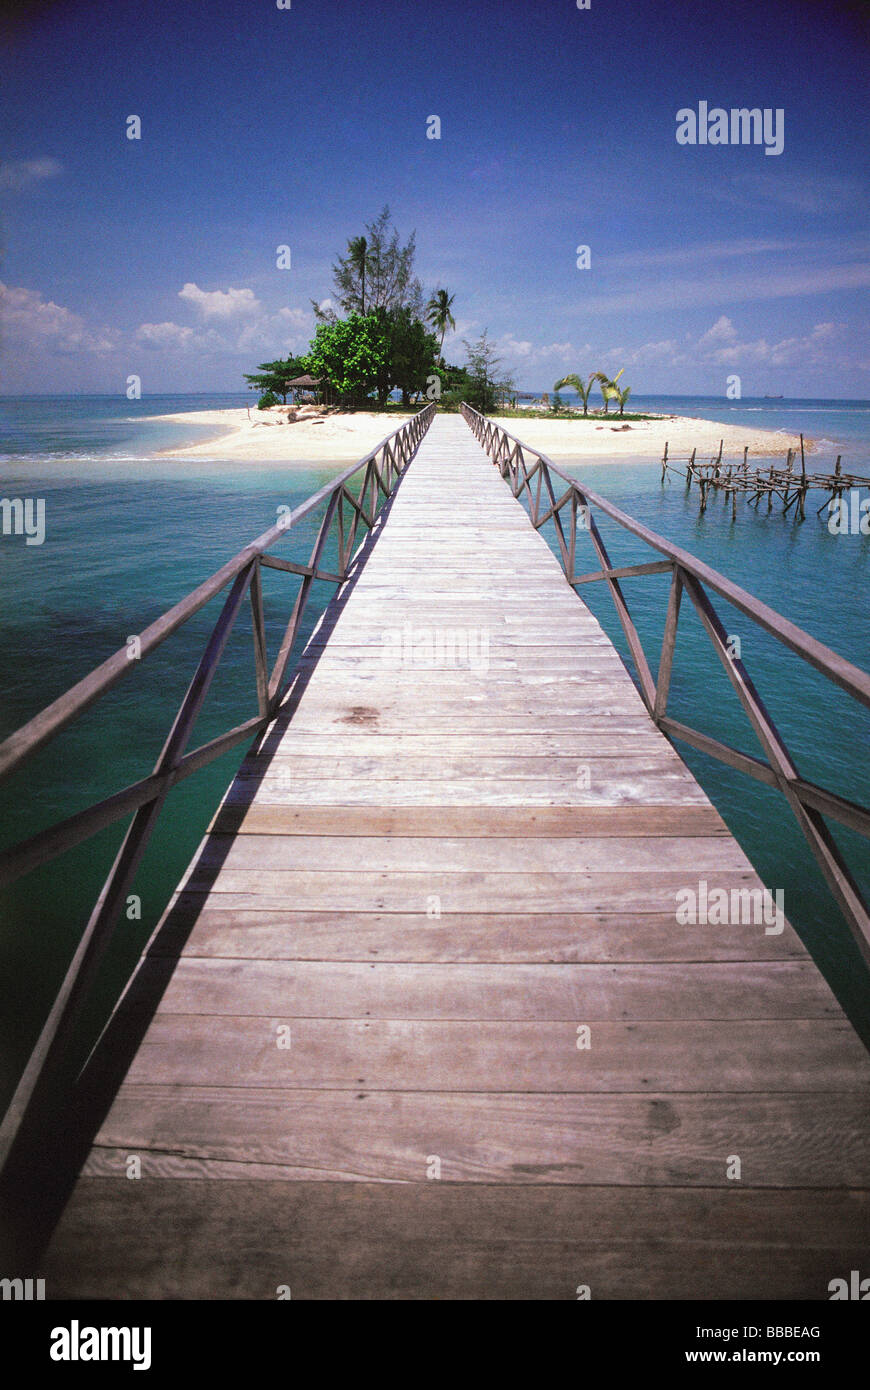 Indonesia, Batam Island, walkway to No Man's island Stock Photo